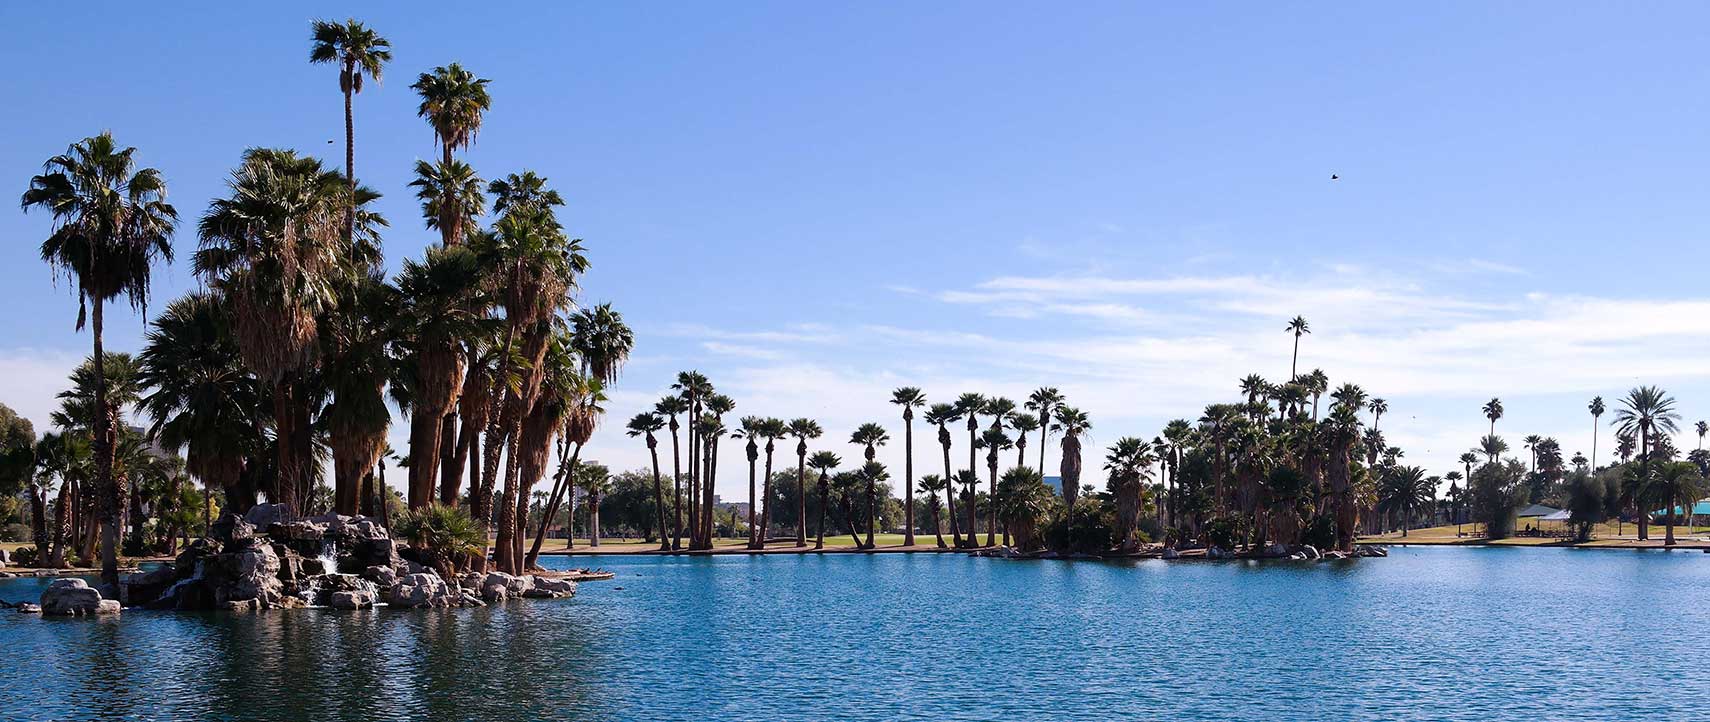 Encanto Lake and park, Phoenix, Arizona